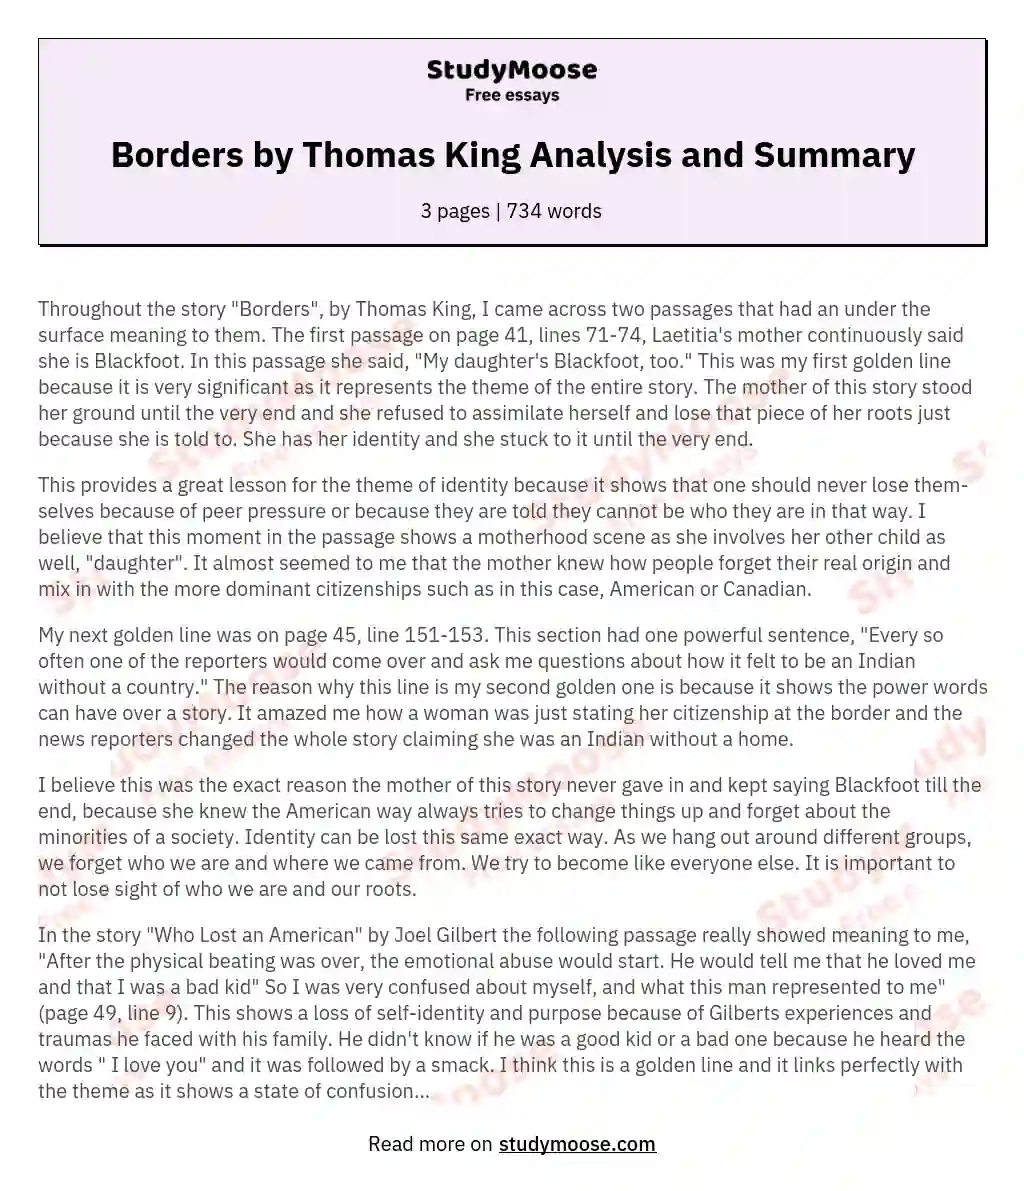 Borders by Thomas King Analysis and Summary essay